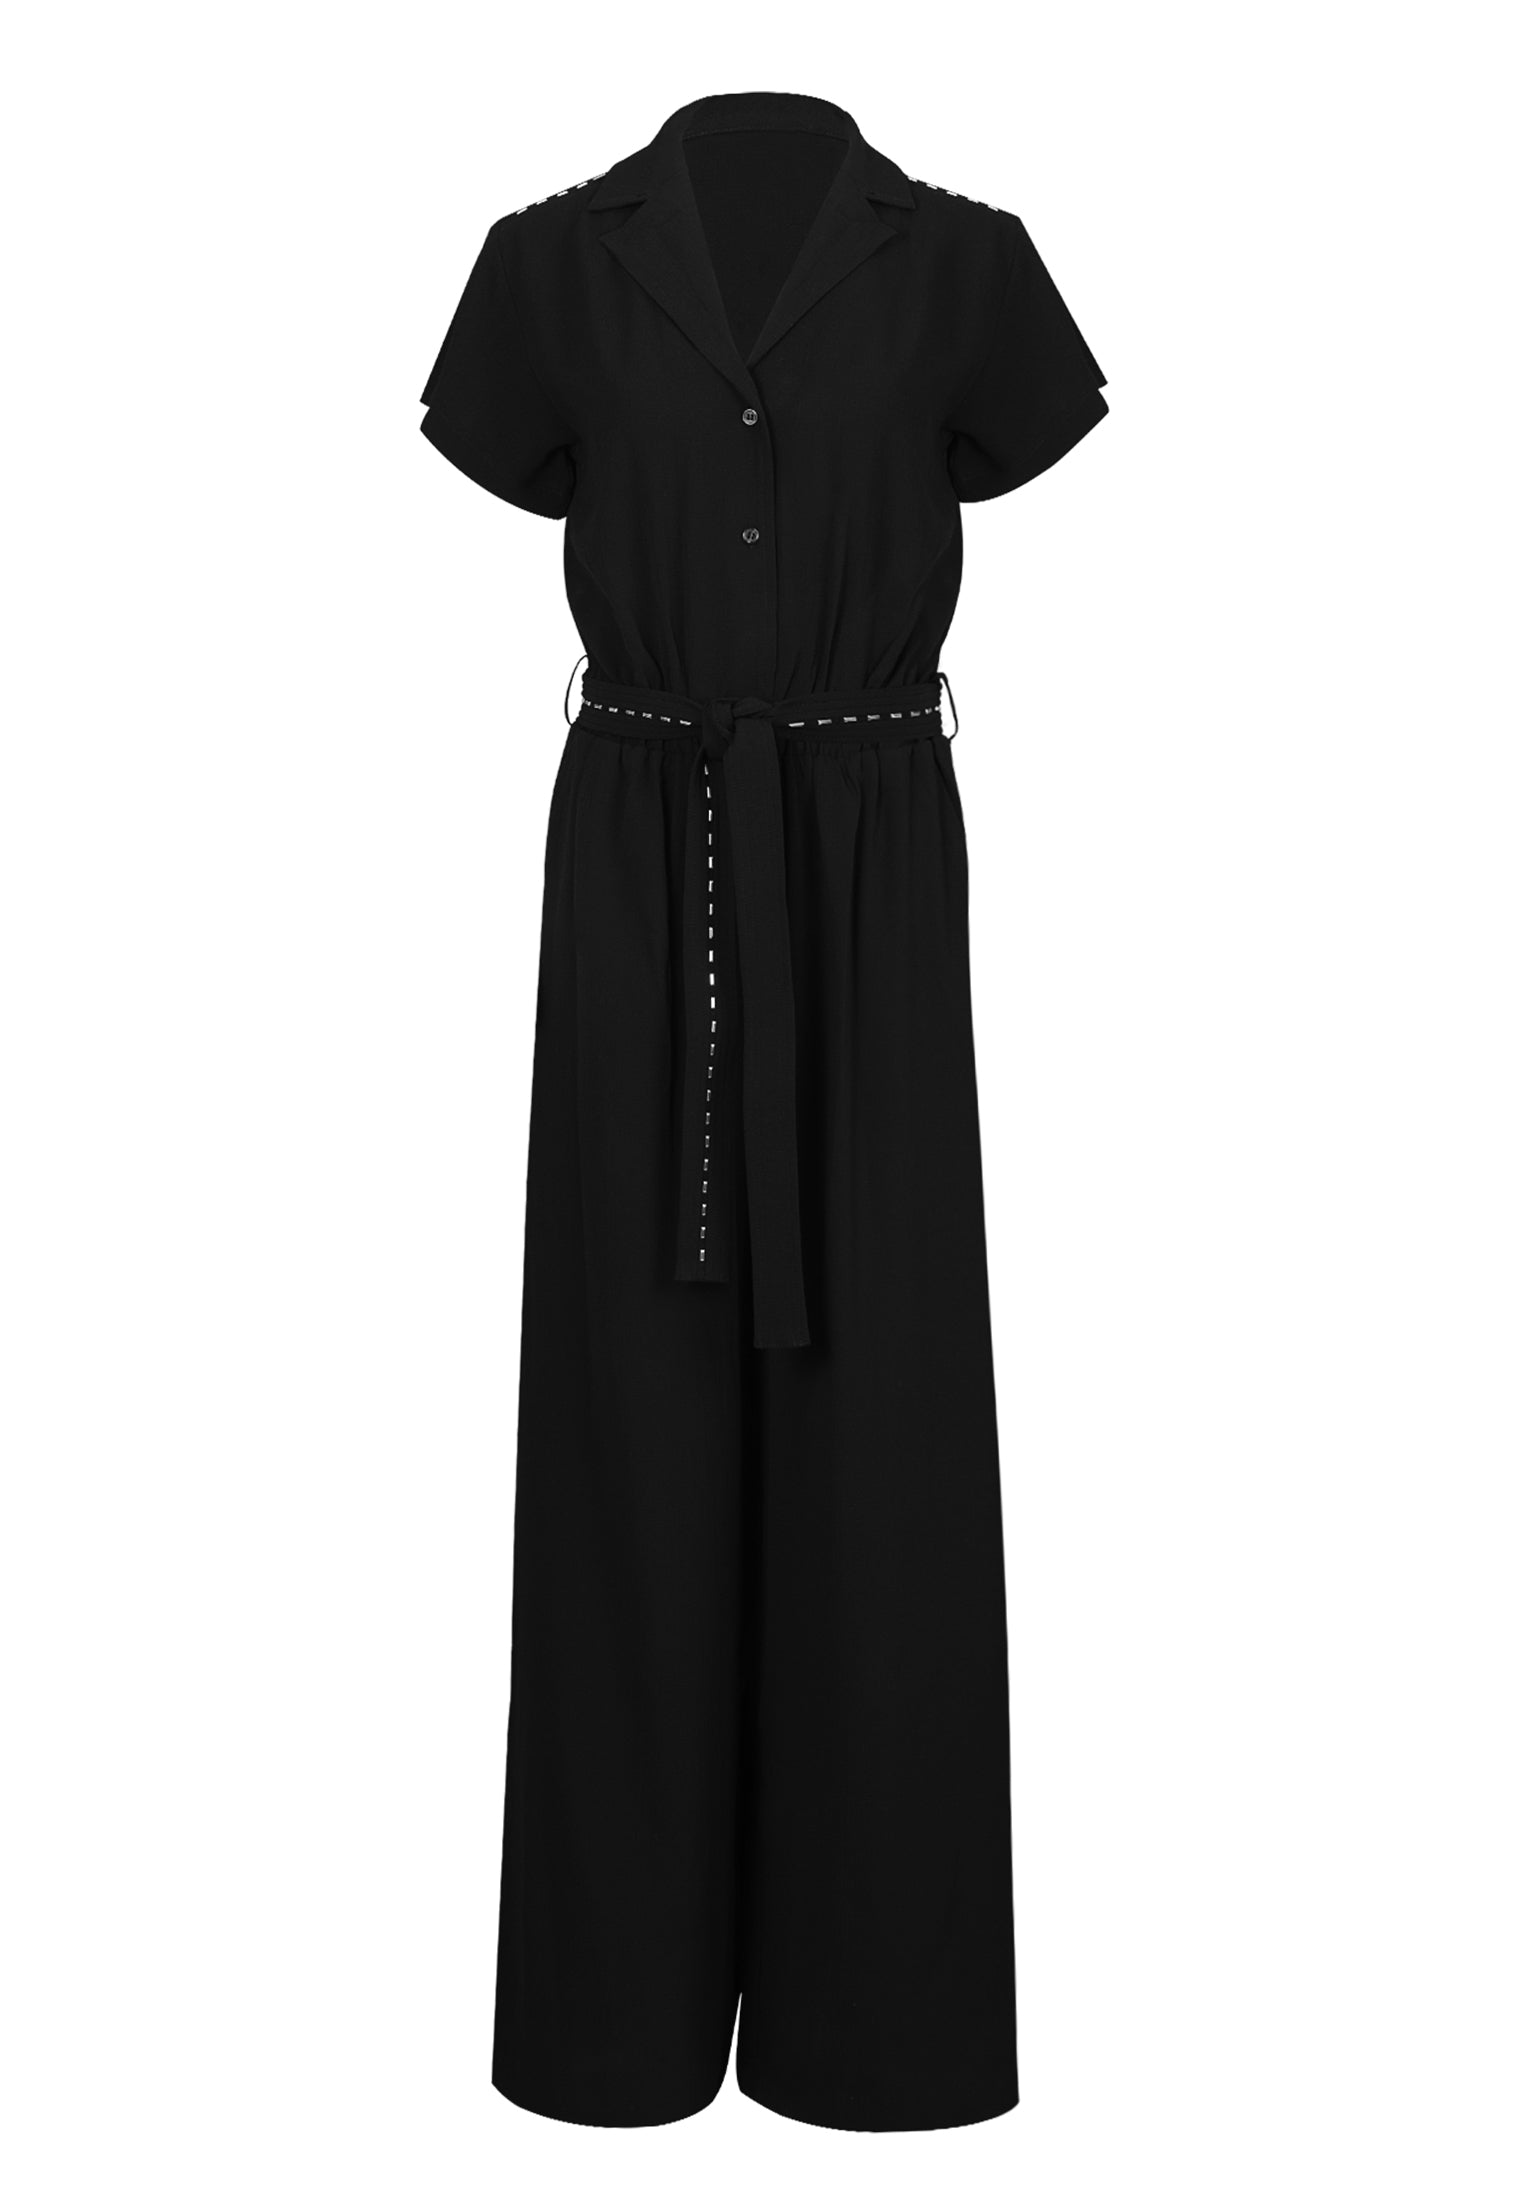 RELIGION Glamour Black Boilersuit 